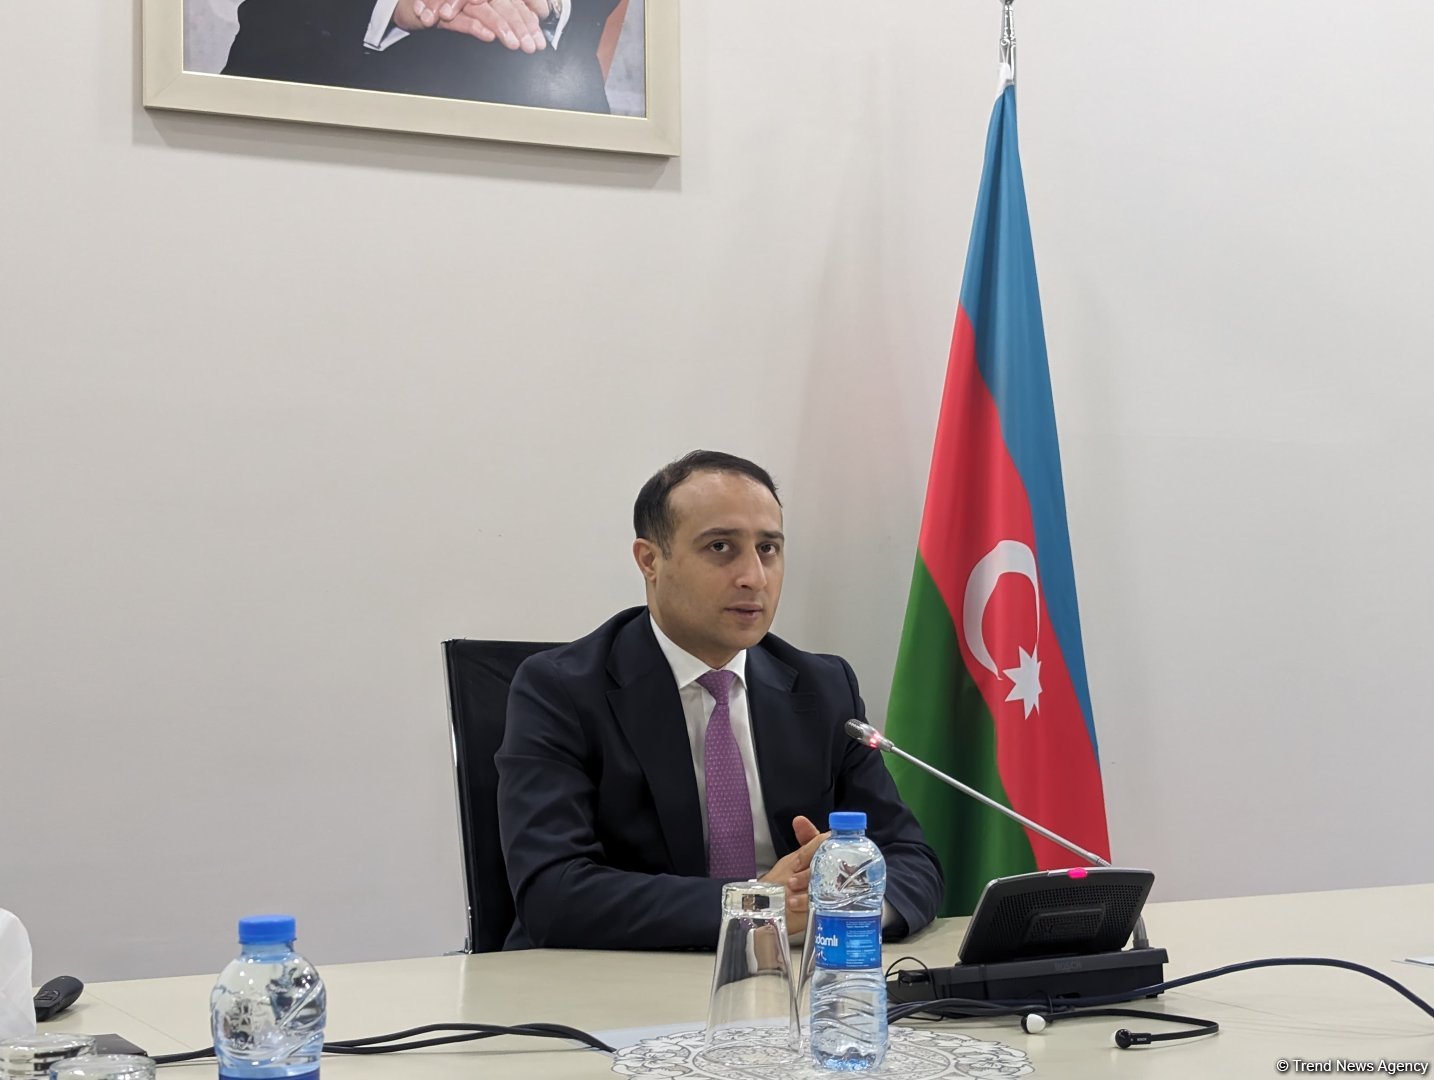 Digital twin system to accelerate digitalization in Azerbaijan - C4IR's Executive Director